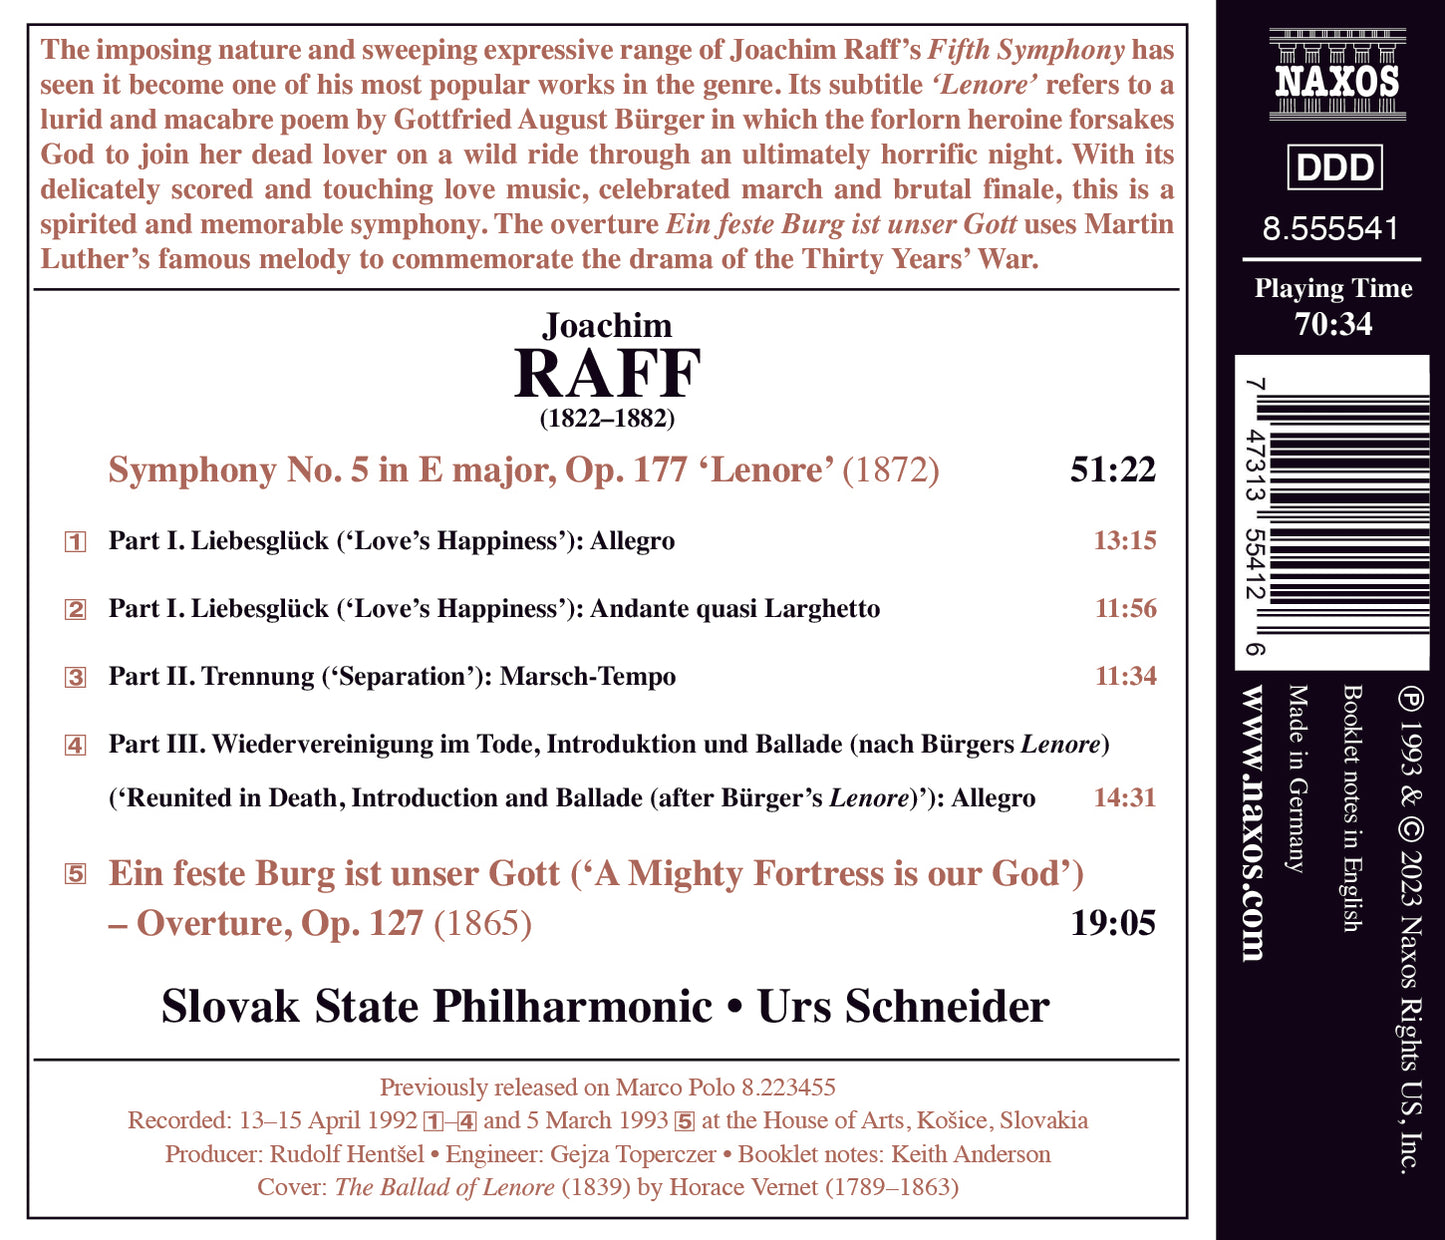 Raff: Symphony No. 5 "Lenore"